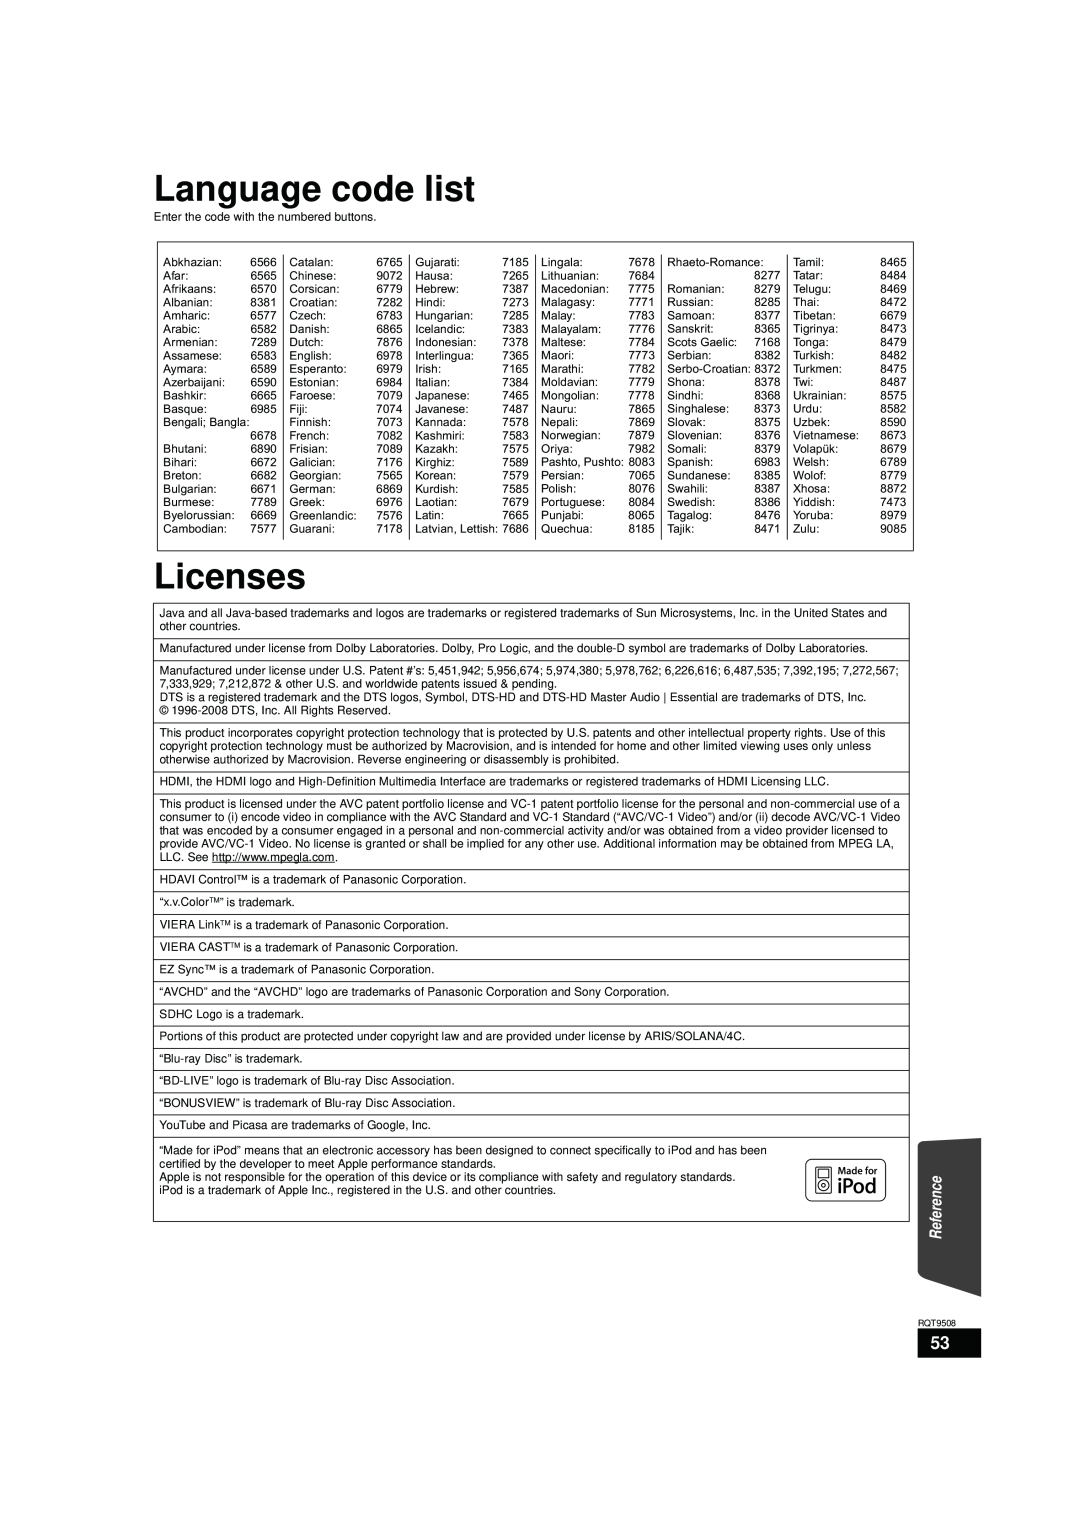 Panasonic SC-BT203, SC-BT200, SC-BT303 warranty Language code list, Licenses 